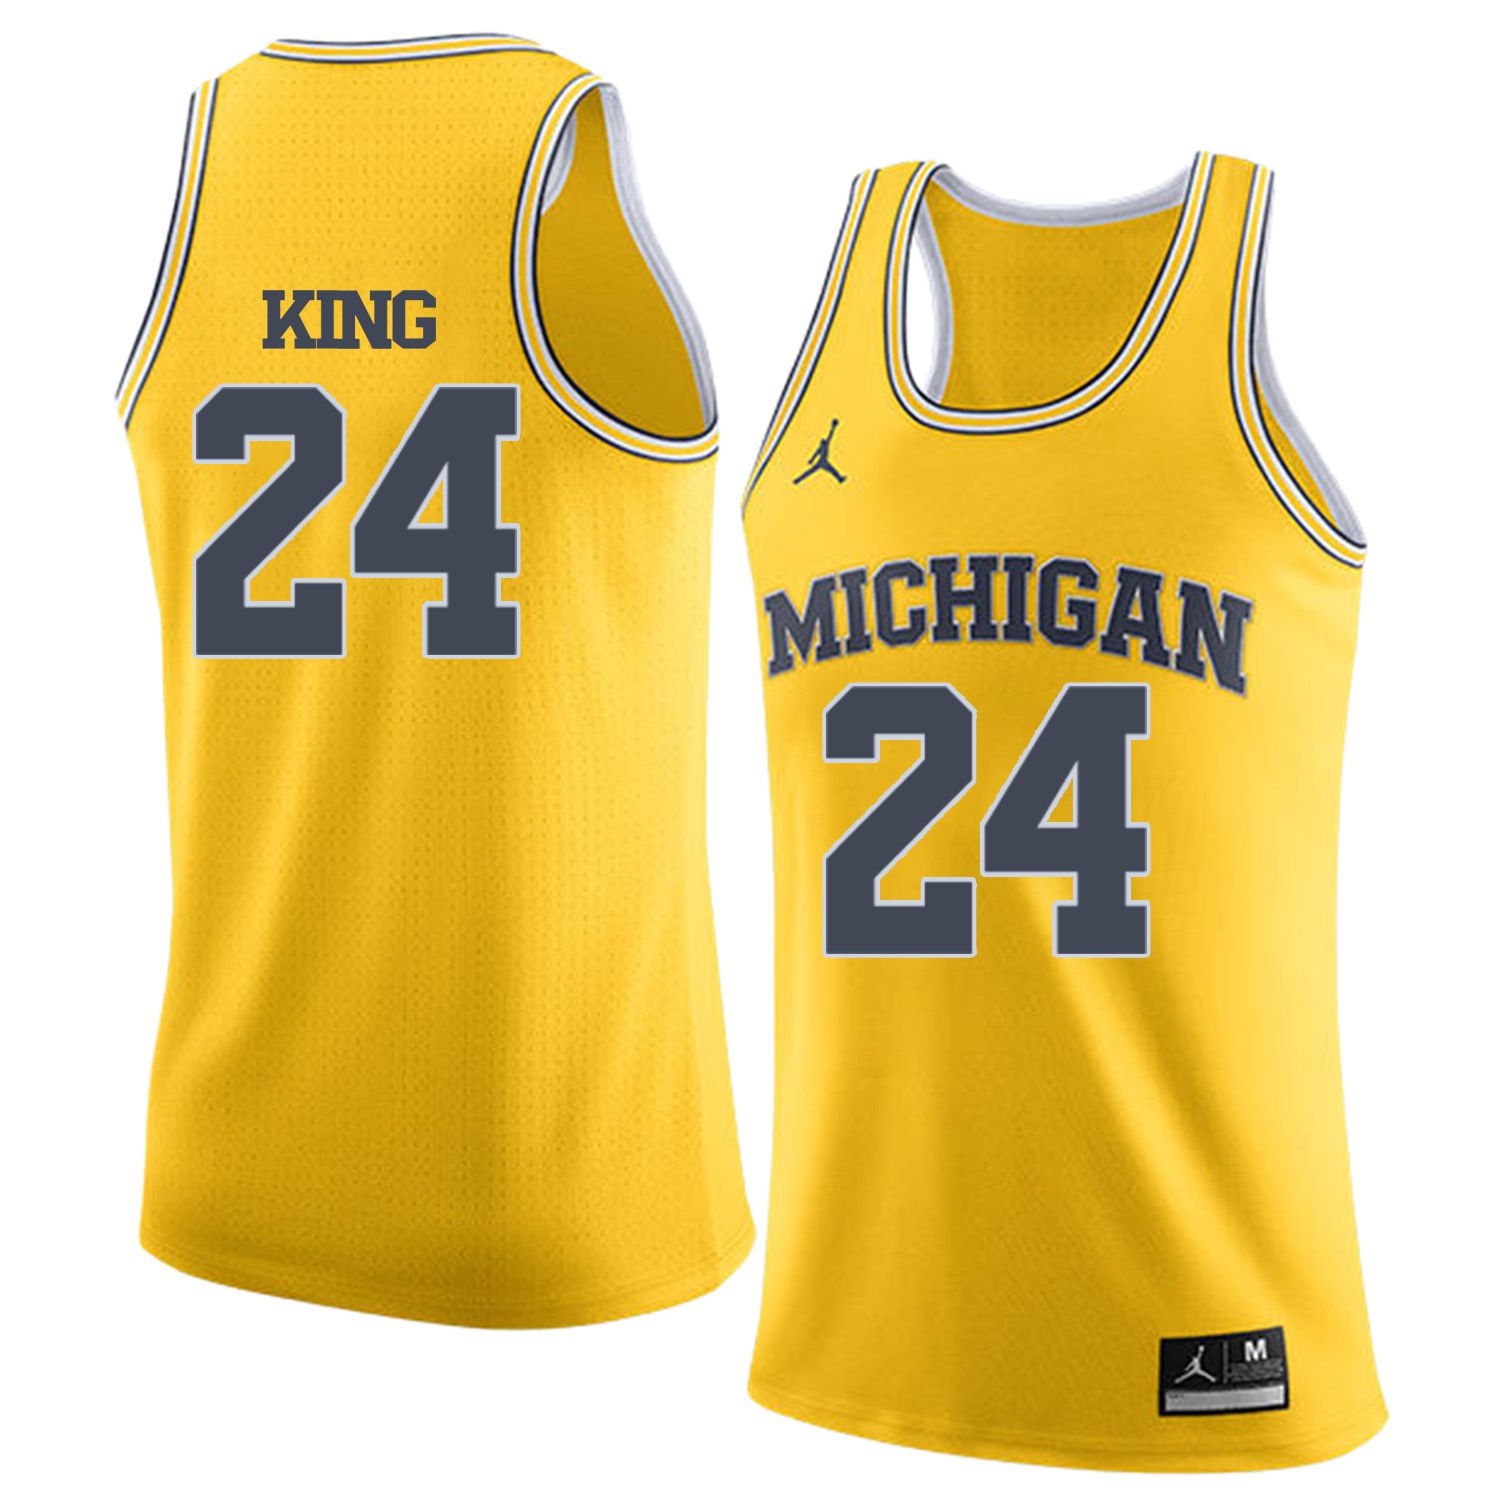 Men Jordan University of Michigan Basketball Yellow #24 King Customized NCAA Jerseys